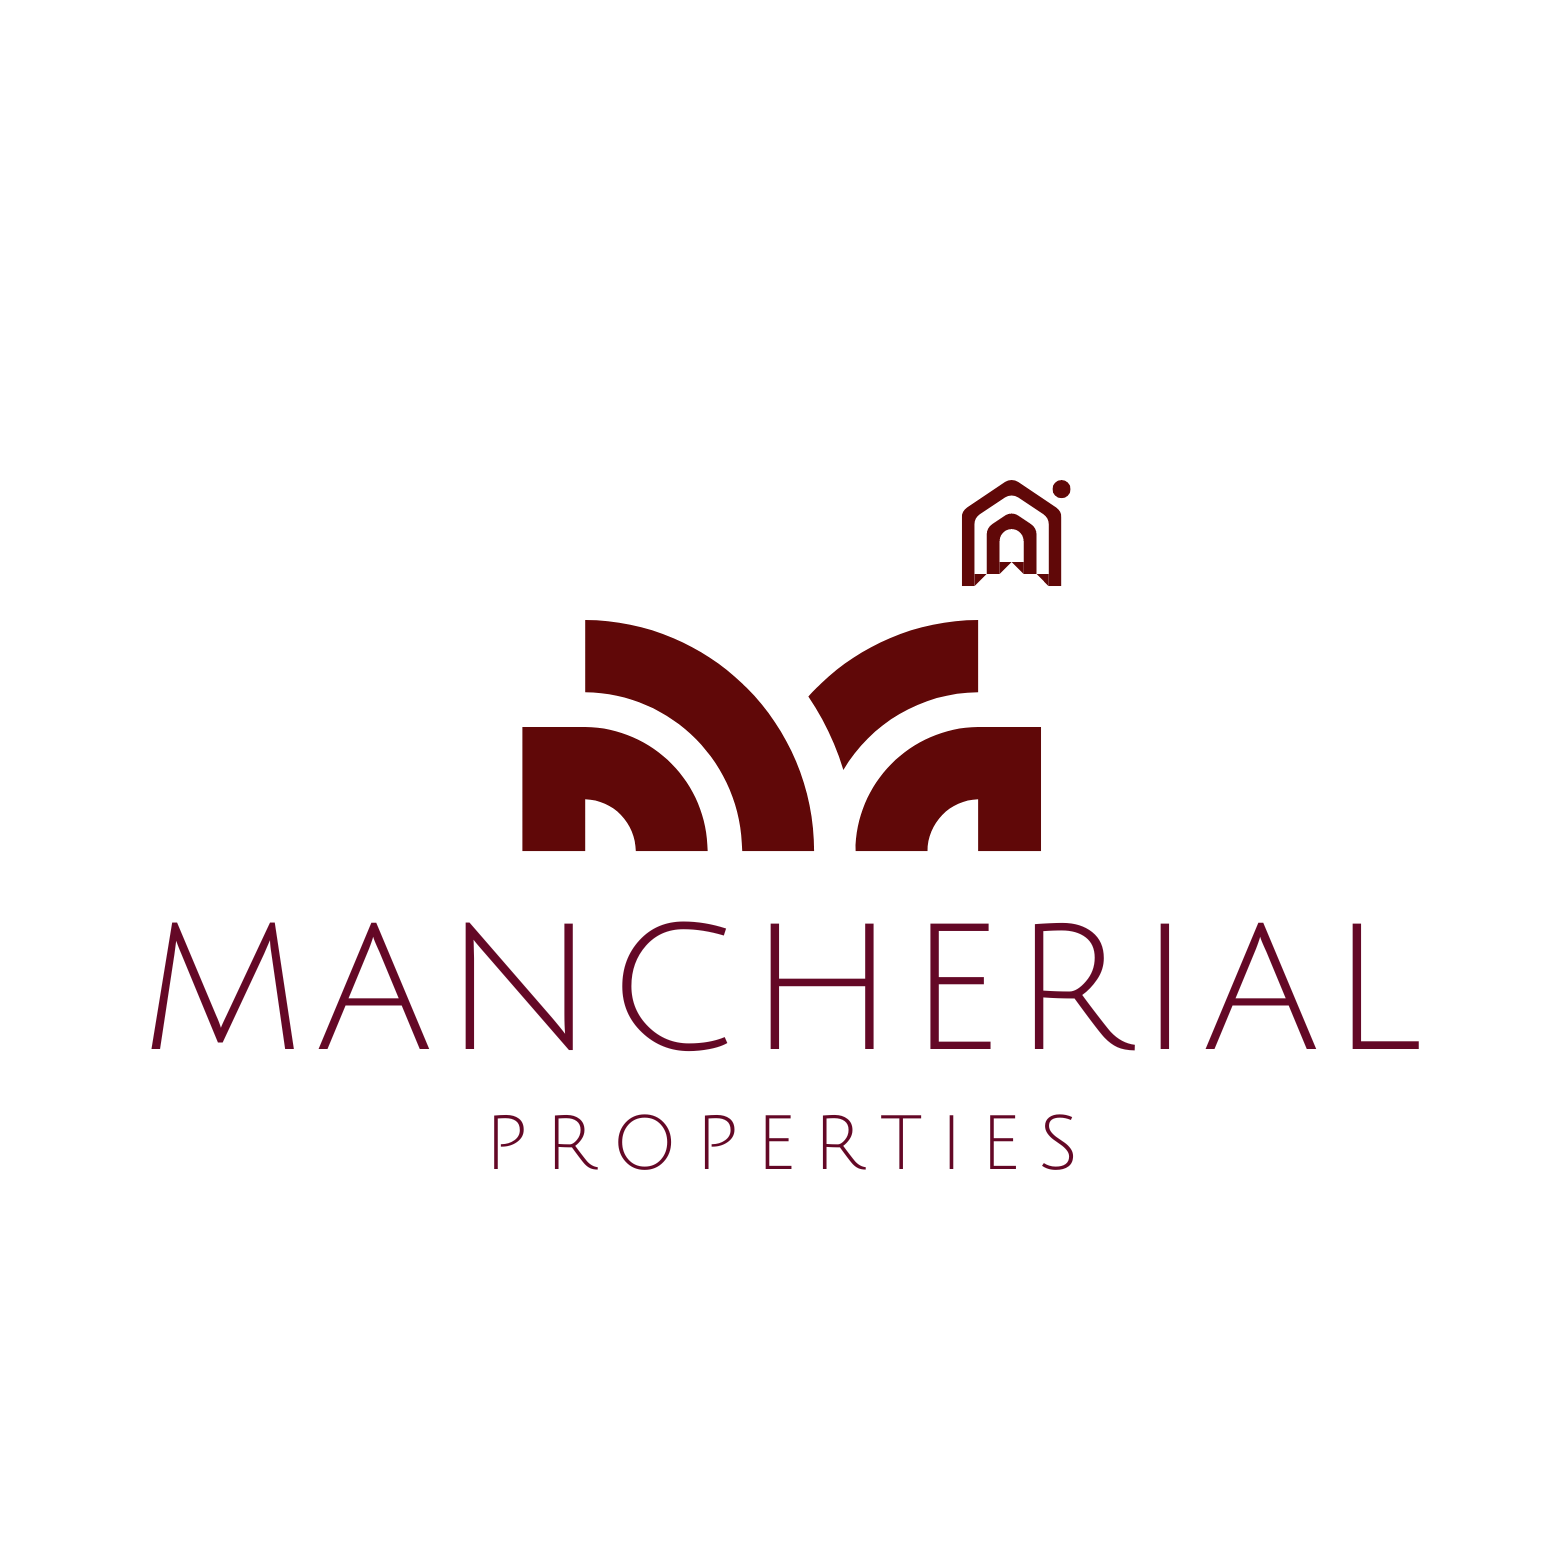 Mancherial Properties